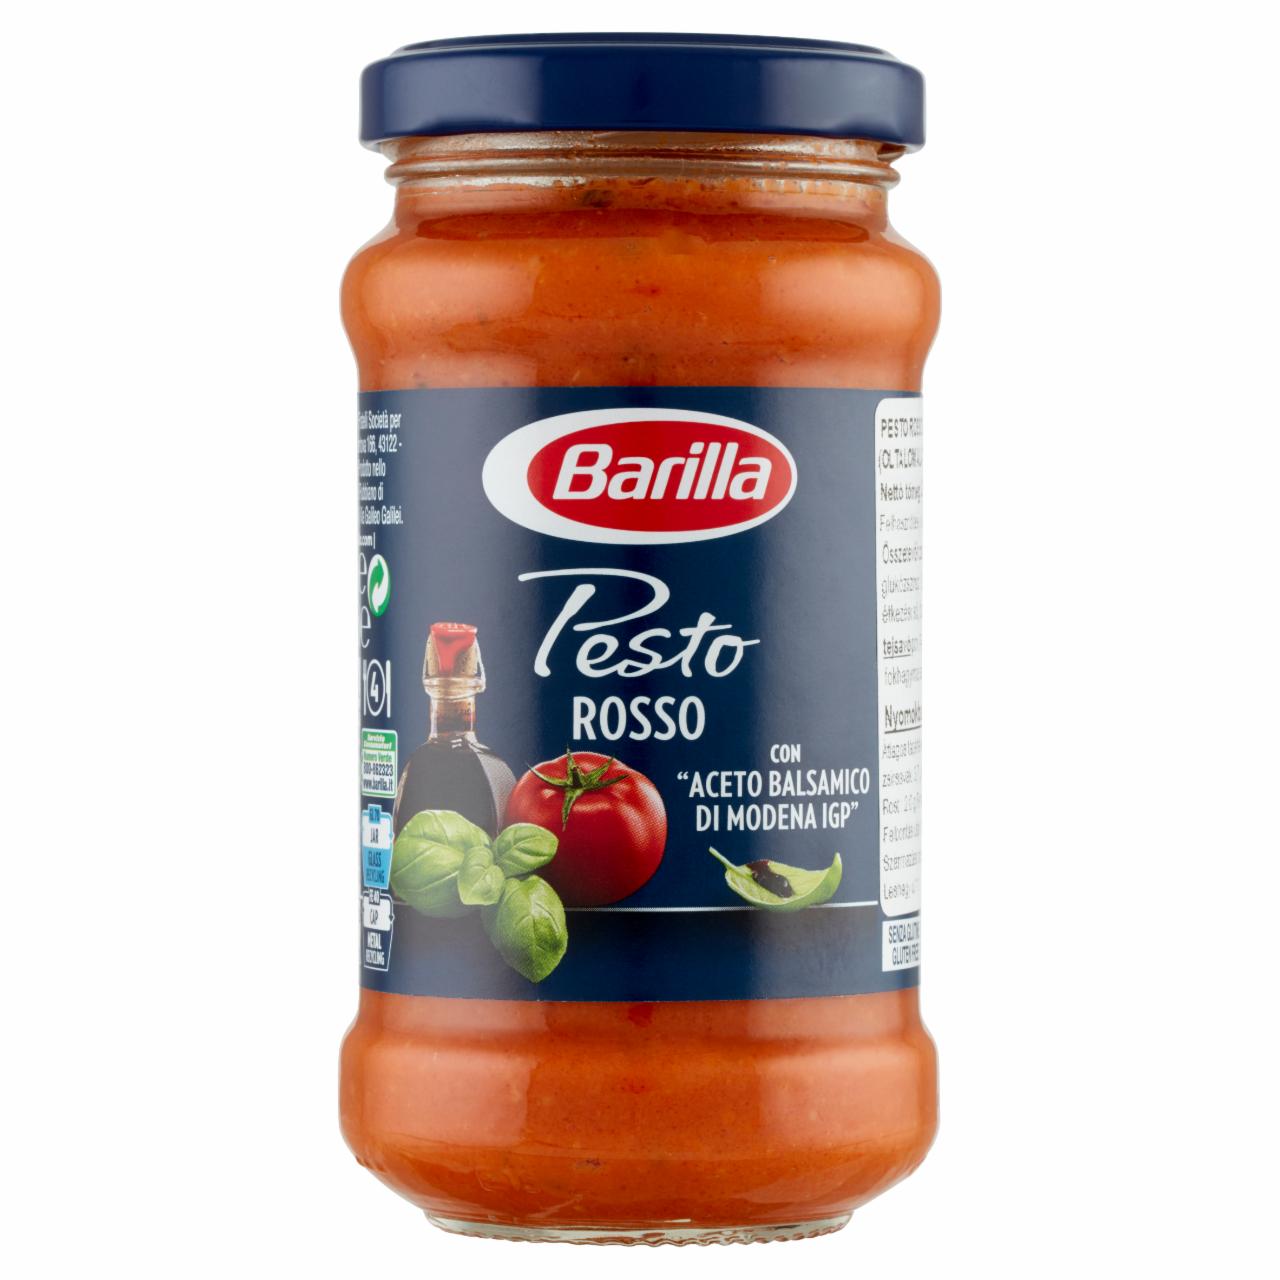 Photo - Barilla Pesto Rosso Red Pesto Sauce with Tomato, Basil and Balsamic Vinegar of Modena 200 g